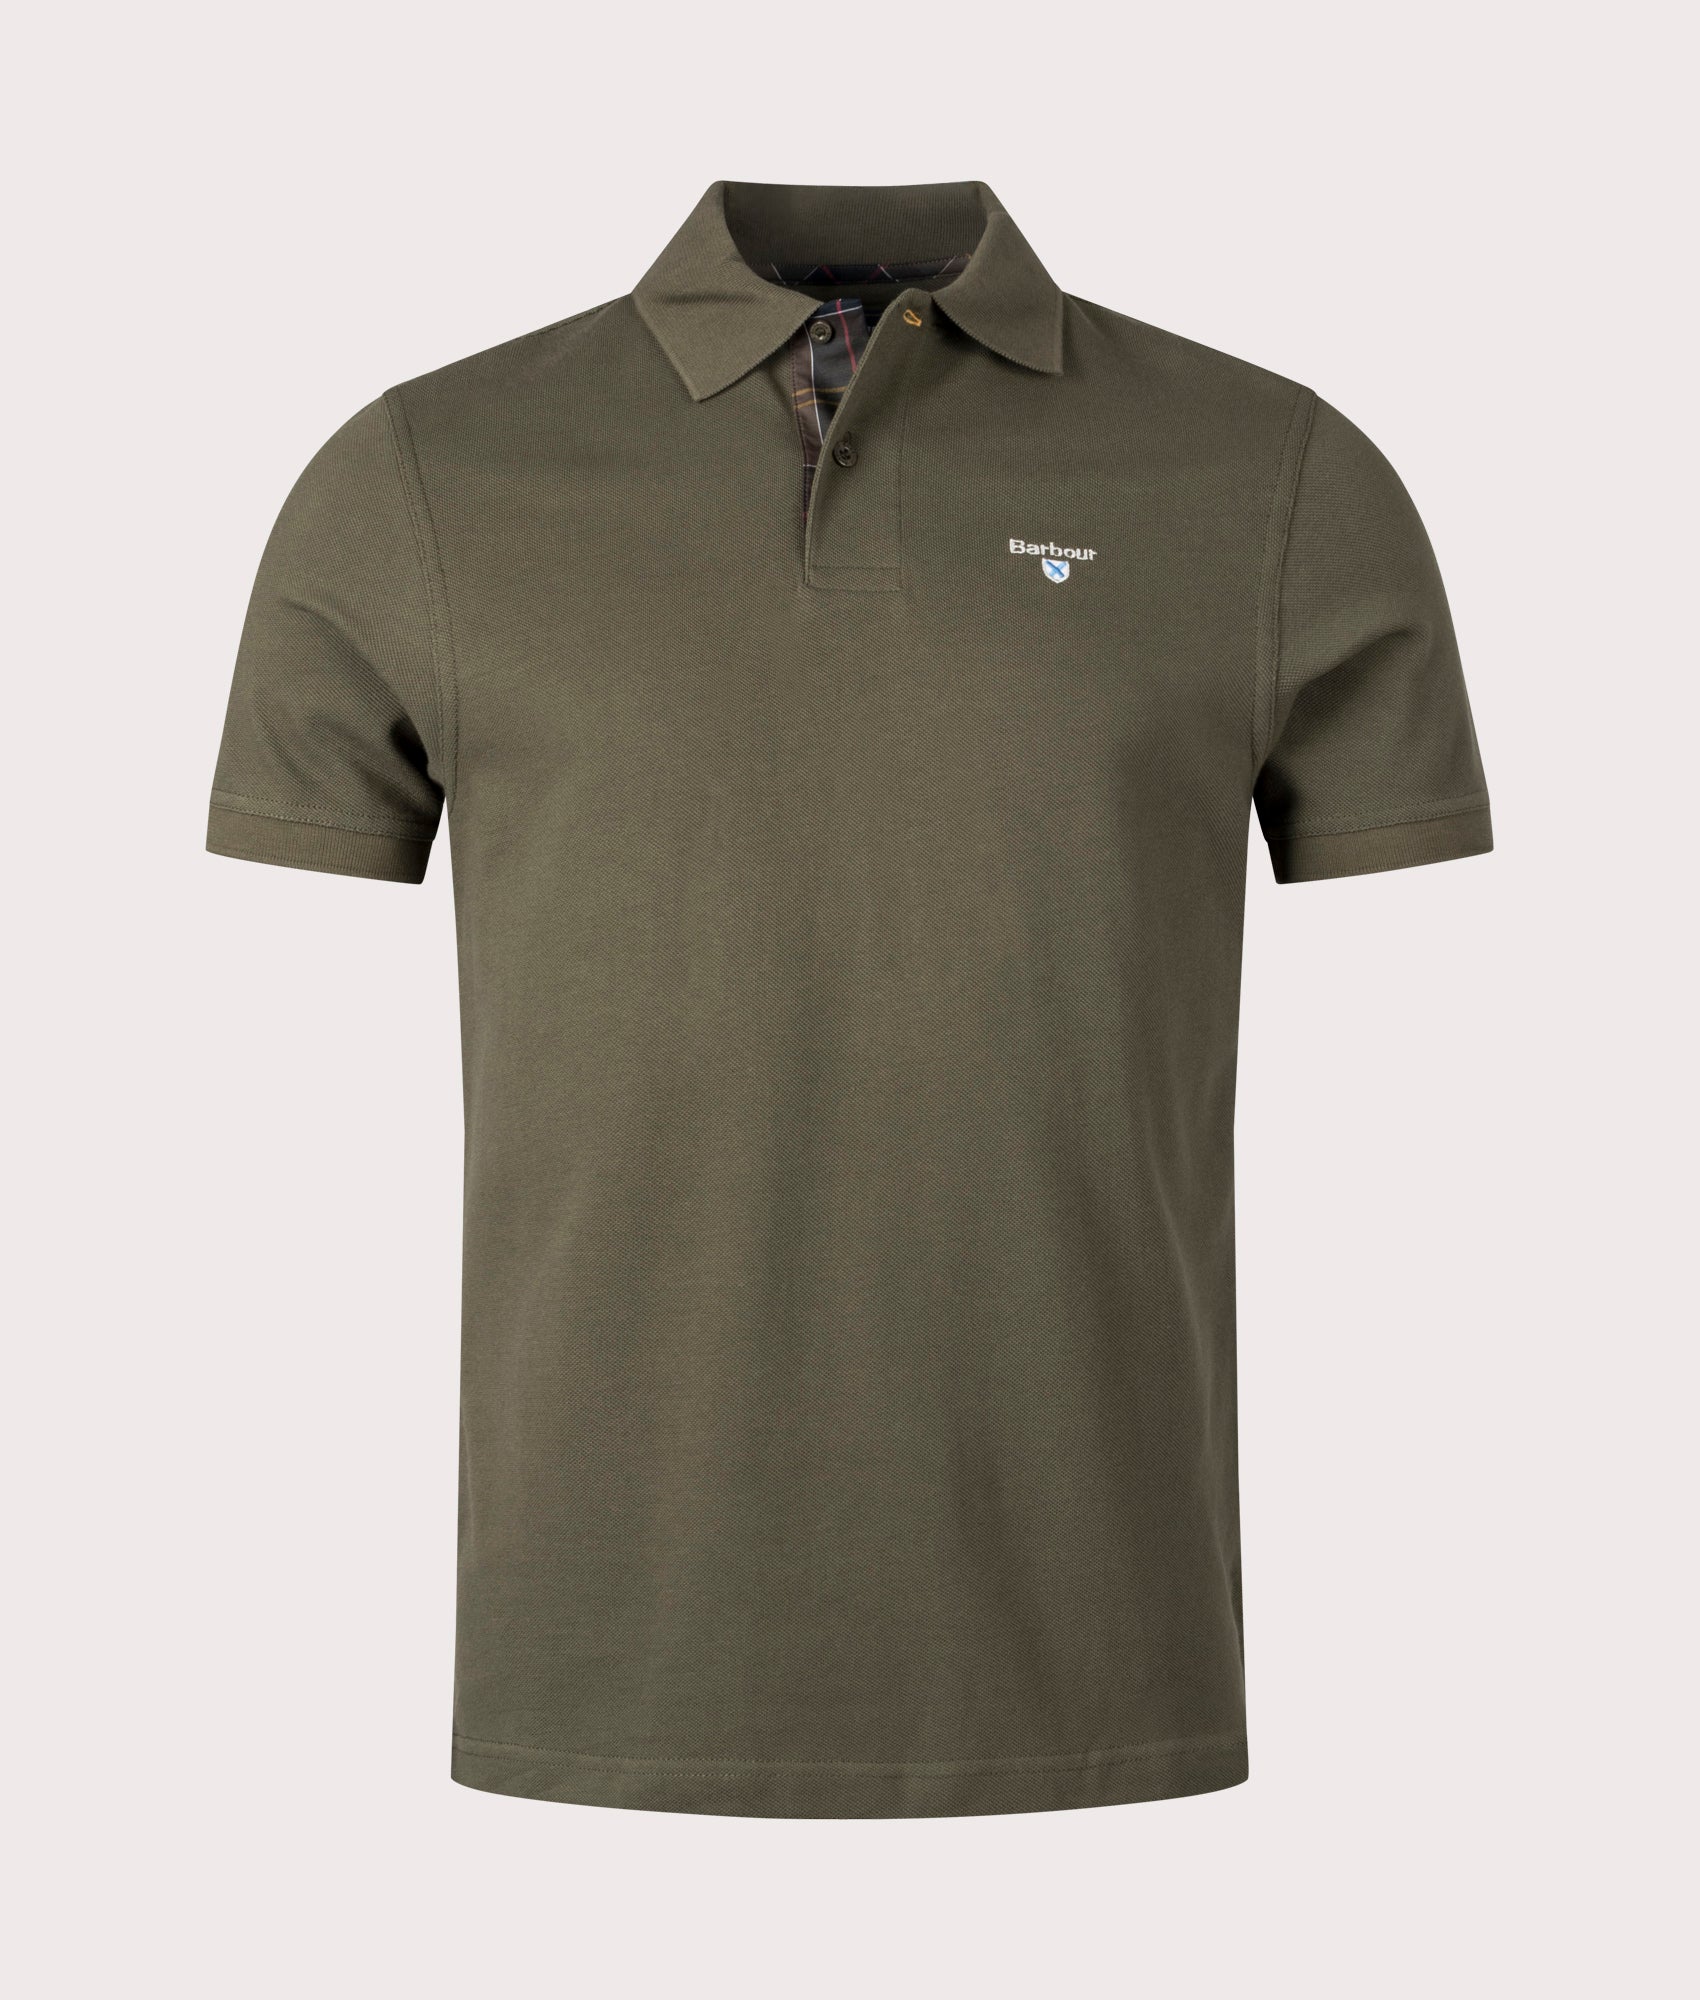 Barbour Lifestyle Mens Tartan Pique Polo Shirt - Colour: OL51 Dark Olive/Classic - Size: Large